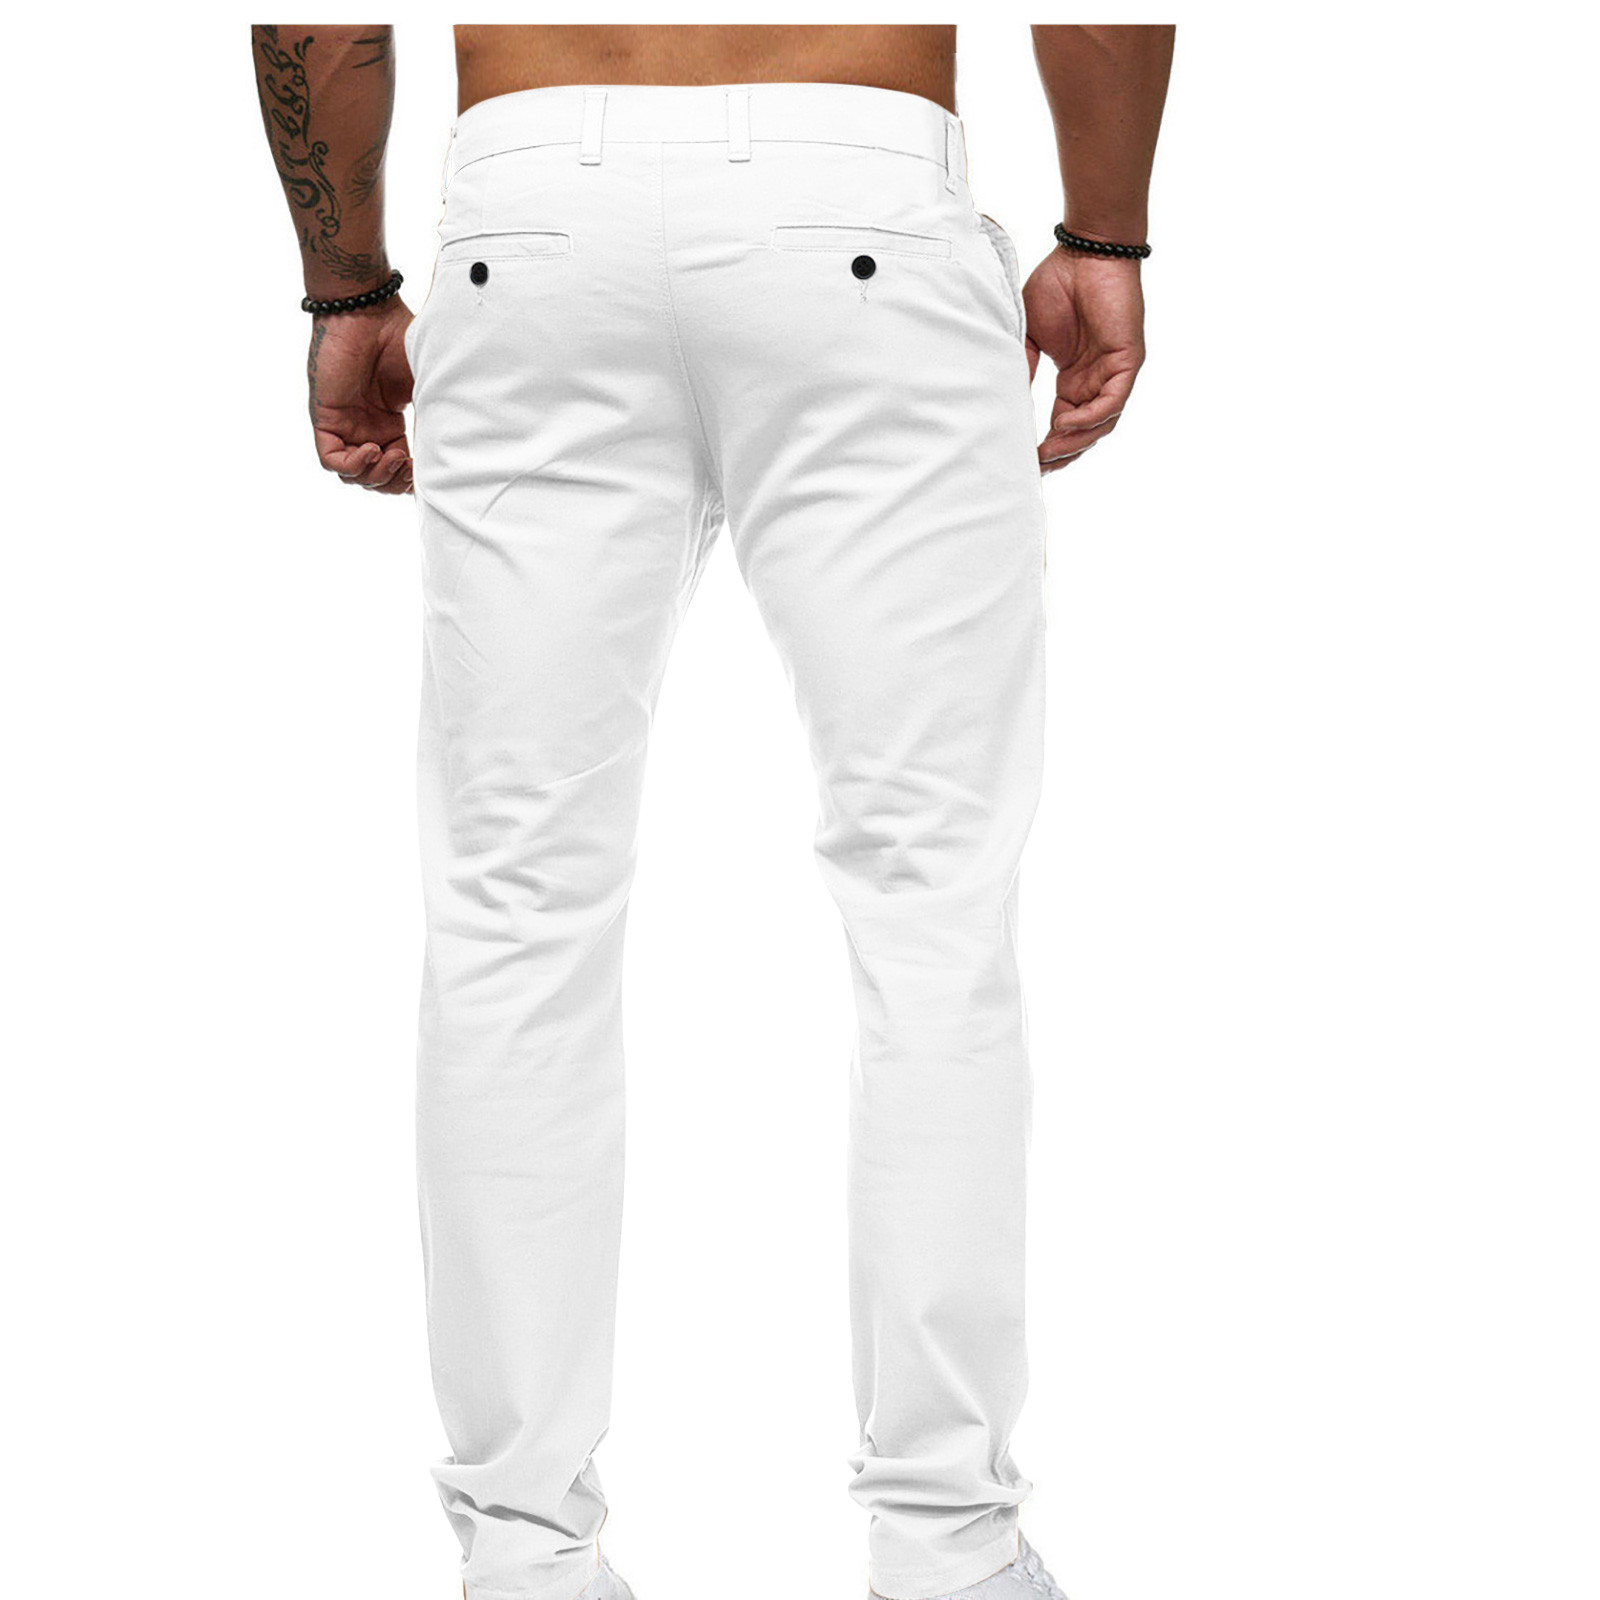 DeHolifer Mens Casual Chinos Pants Cotton Slacks Elastic Waistband Classic Fit Flat Front Khaki Pant White 4XL - image 5 of 5